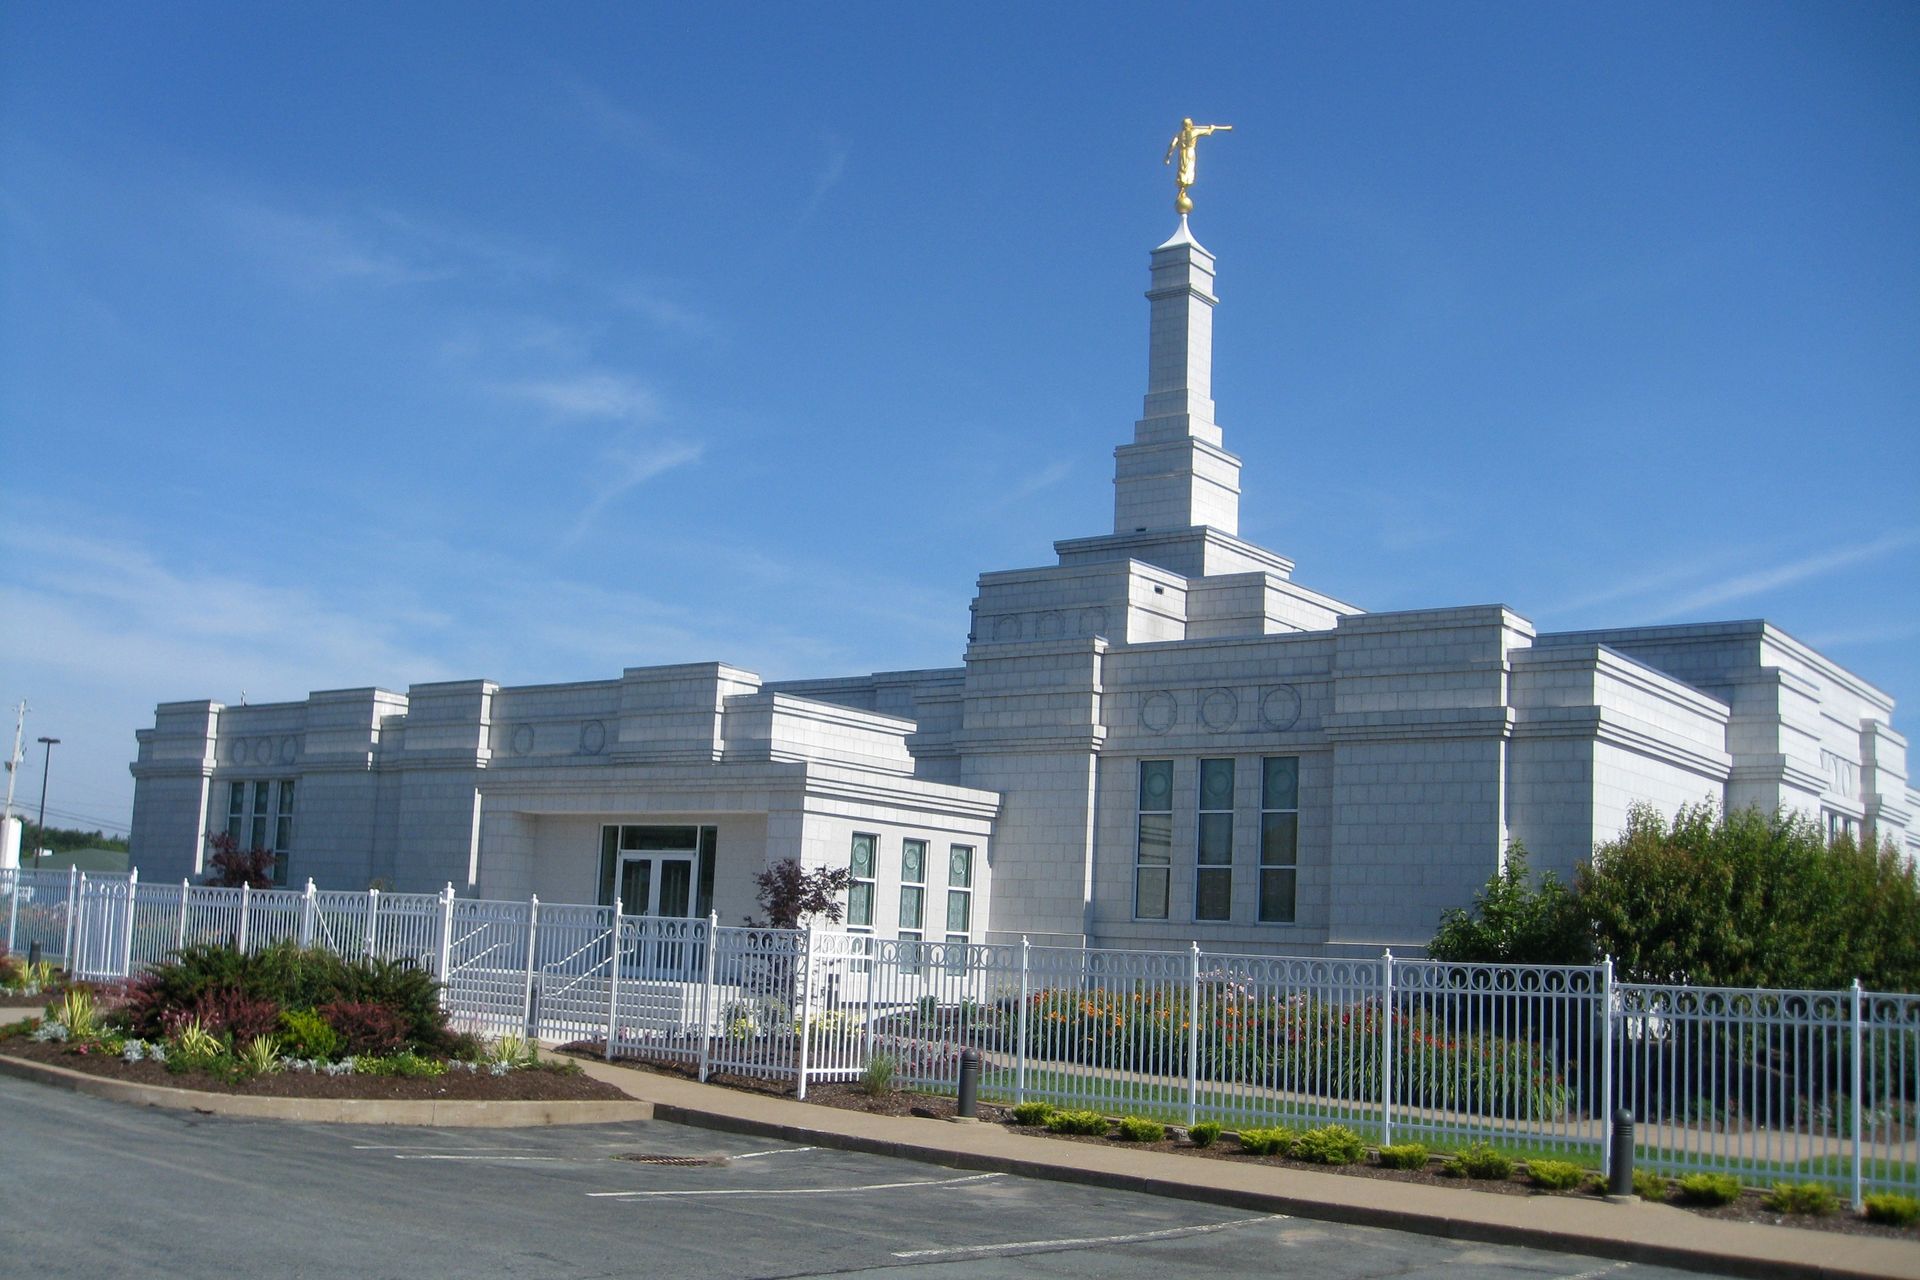 A full view of the Halifax Nova Scotia Temple.